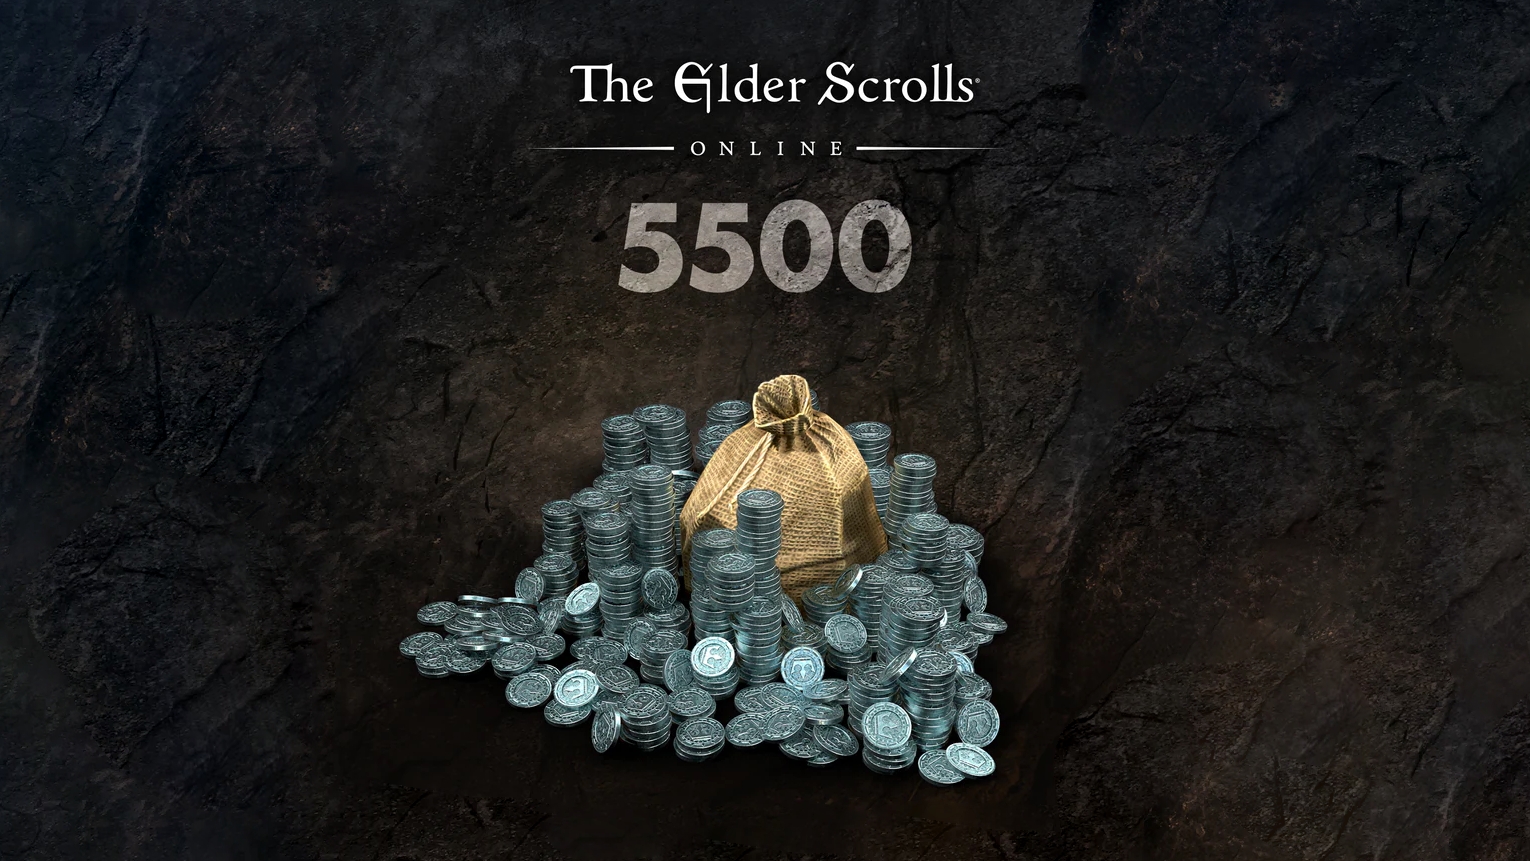 (35.02$) The Elder Scrolls Online: Tamriel Unlimited - 5500 Crowns XBOX One CD Key